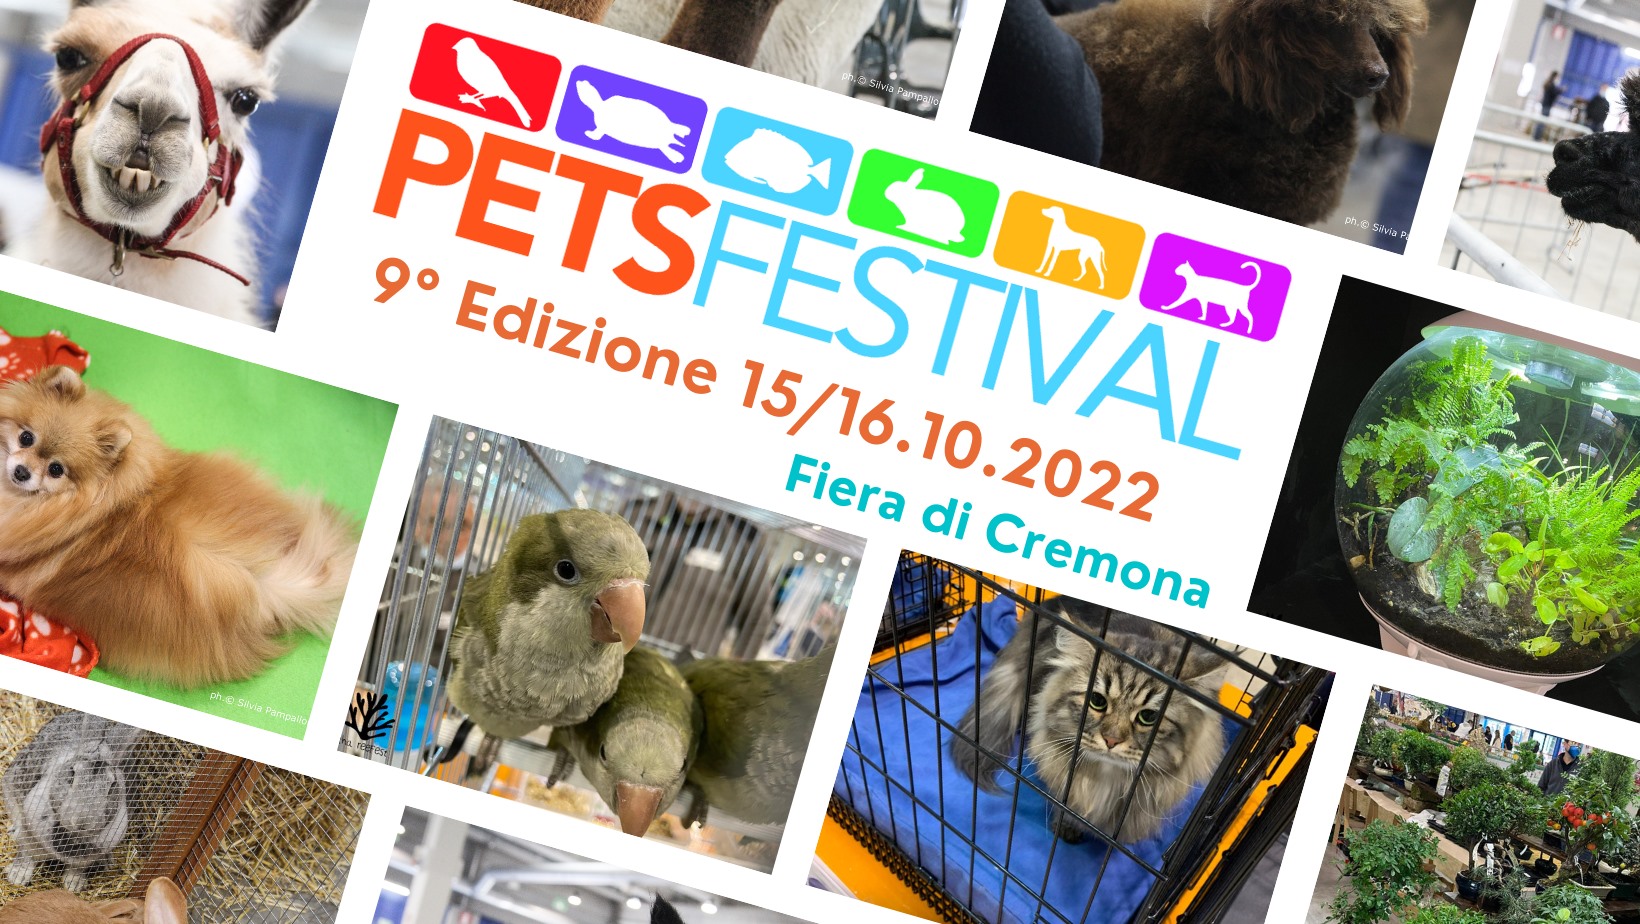 Pets Festival 2022